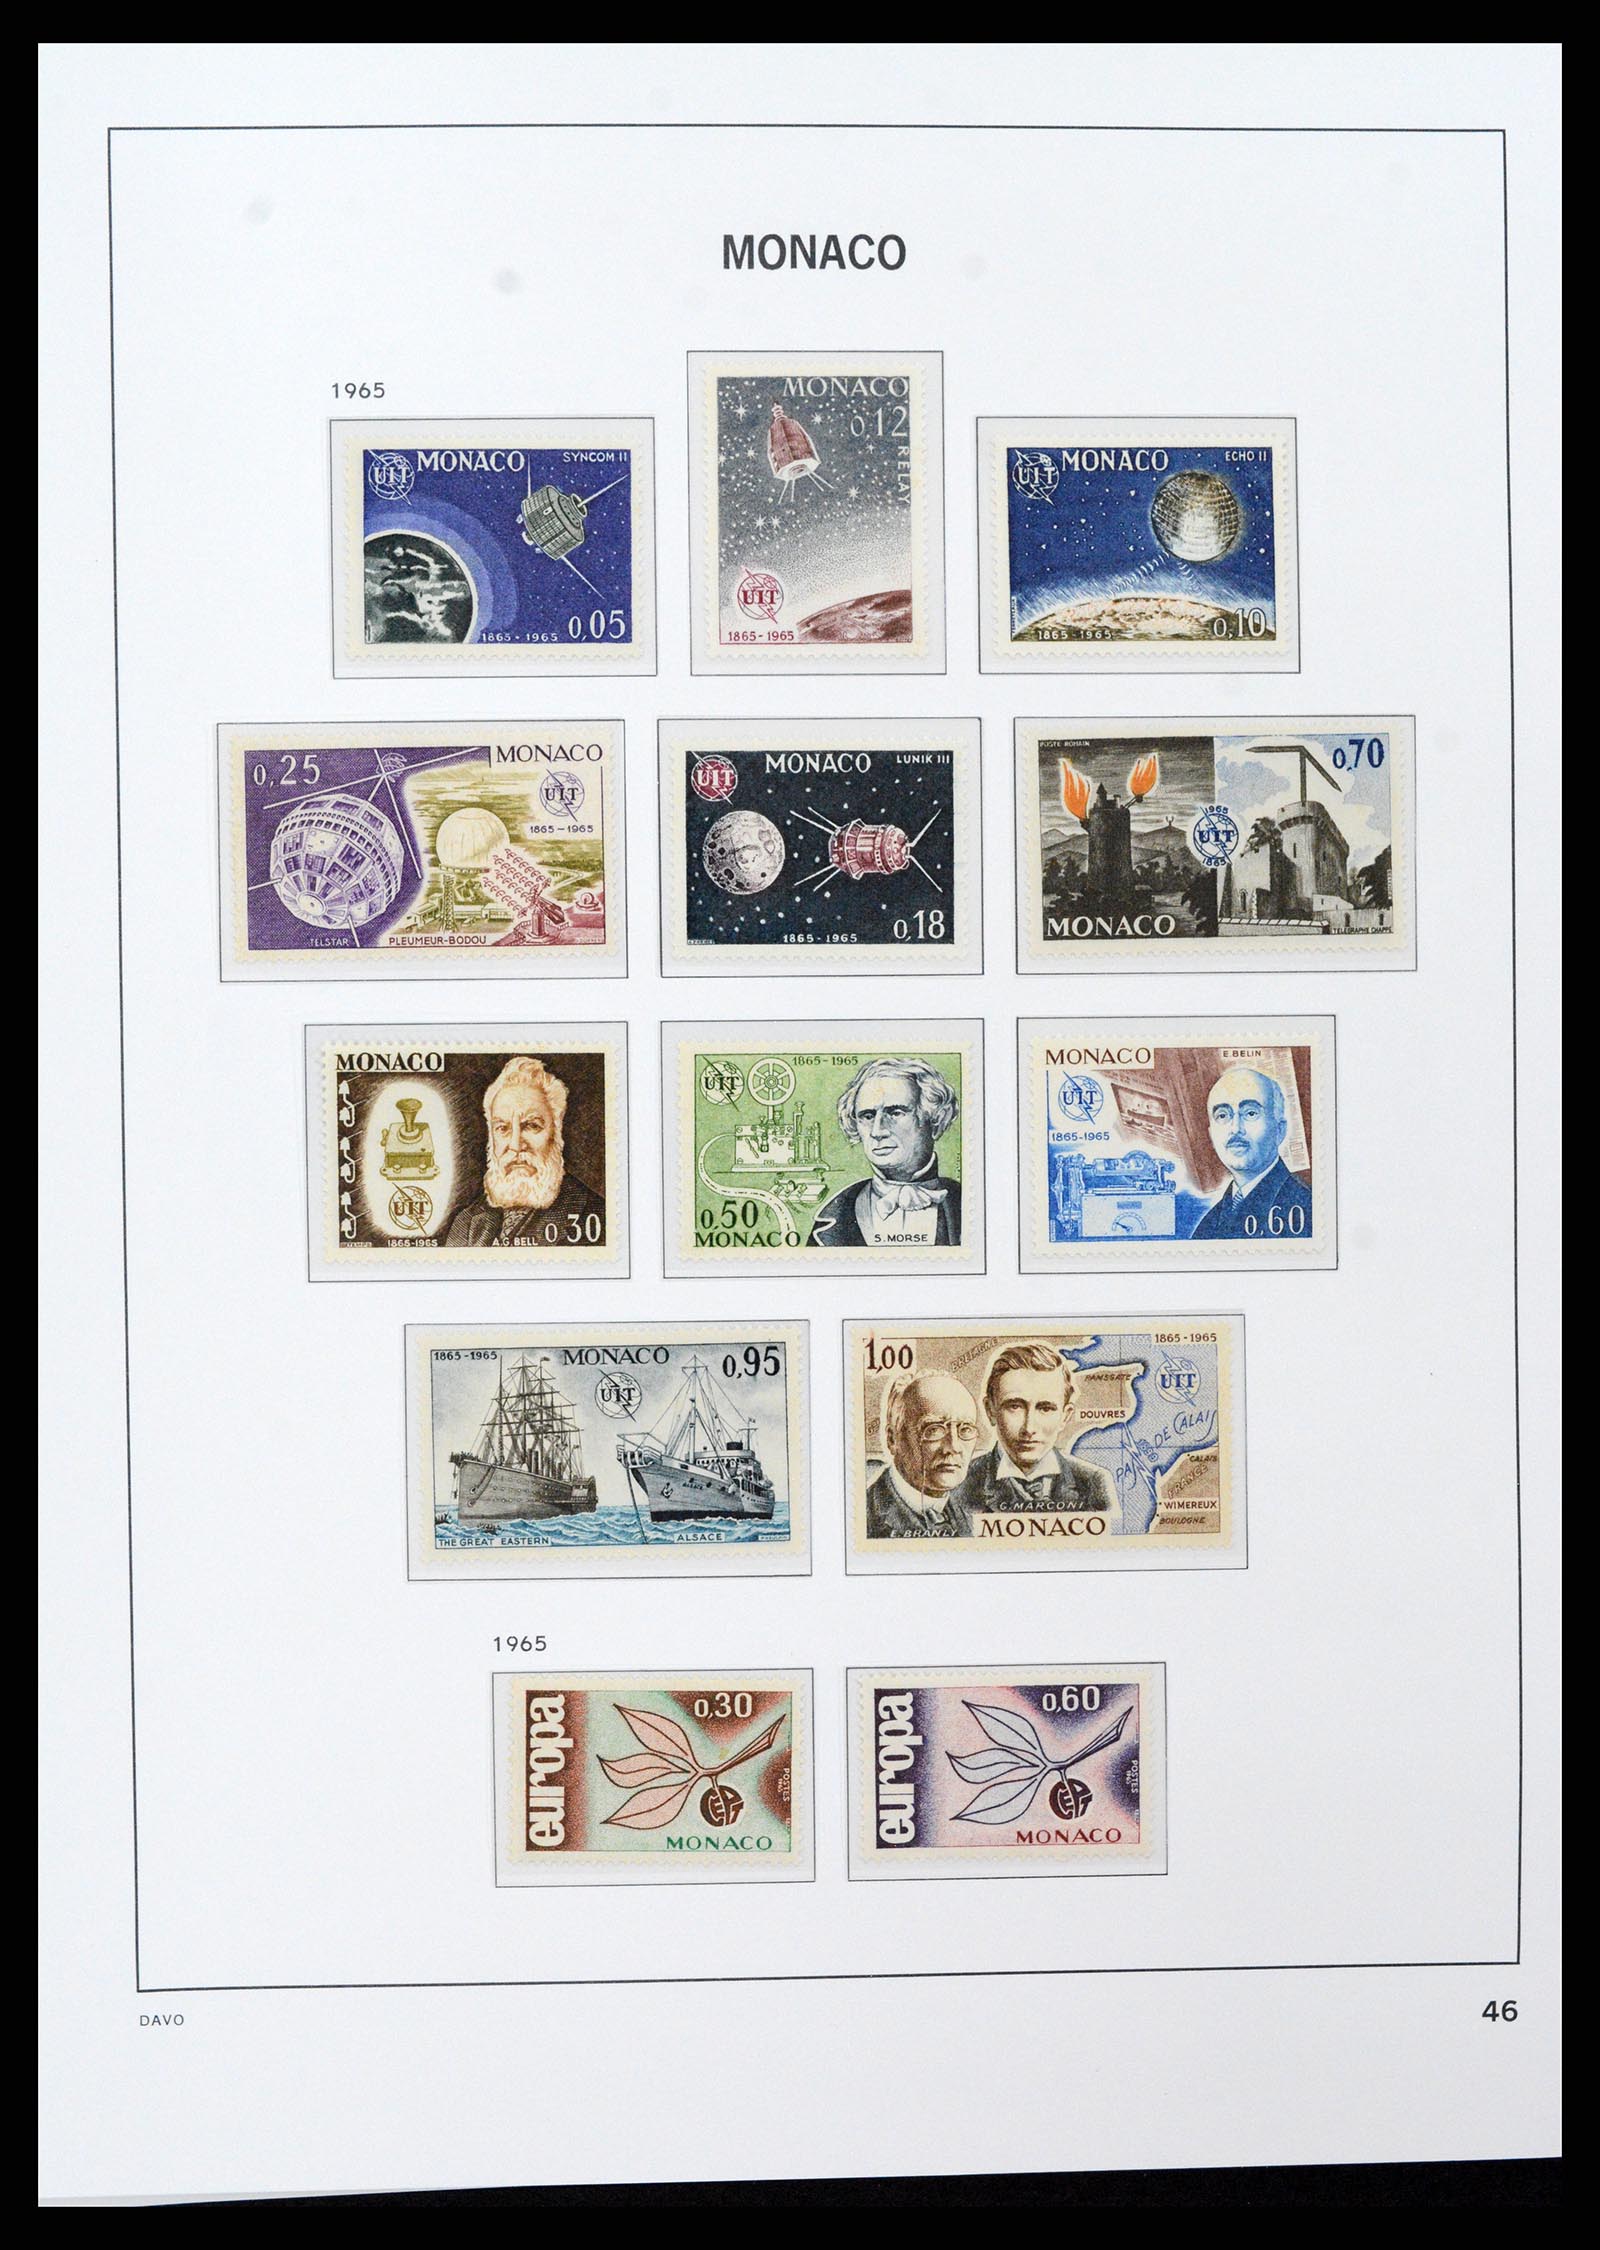 37279 046 - Stamp collection 37279 Monaco 1885-1969.